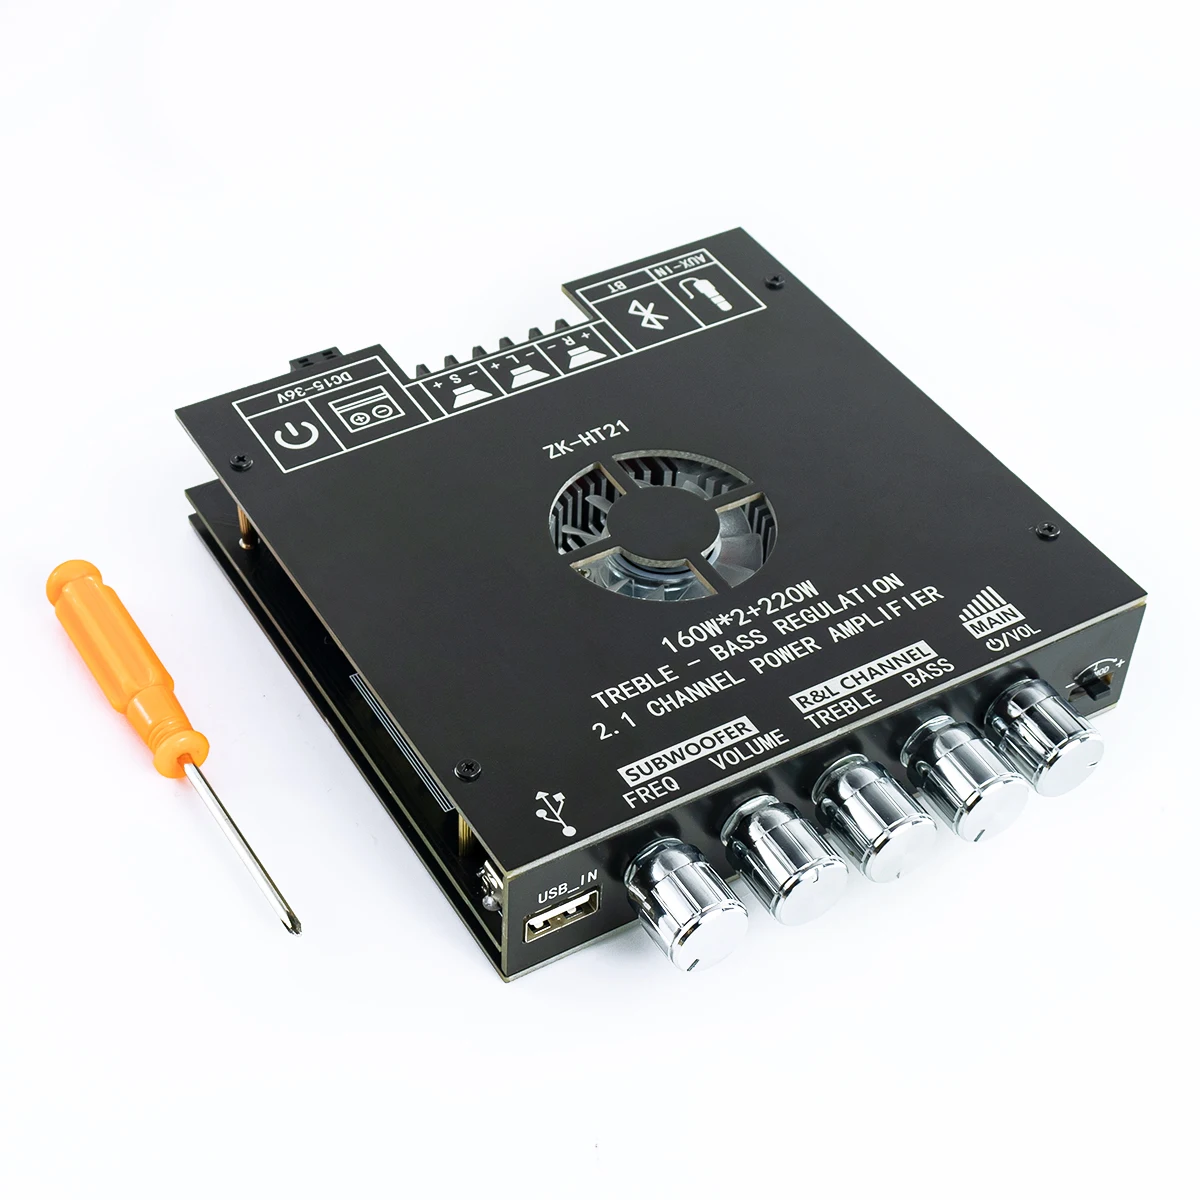 

TDA7498E Blue tooth Amplifier Board 160W*2+220W Subwoofer 2.1 Channel Audio Receiver Power Amplifier Module Treble Bass Control